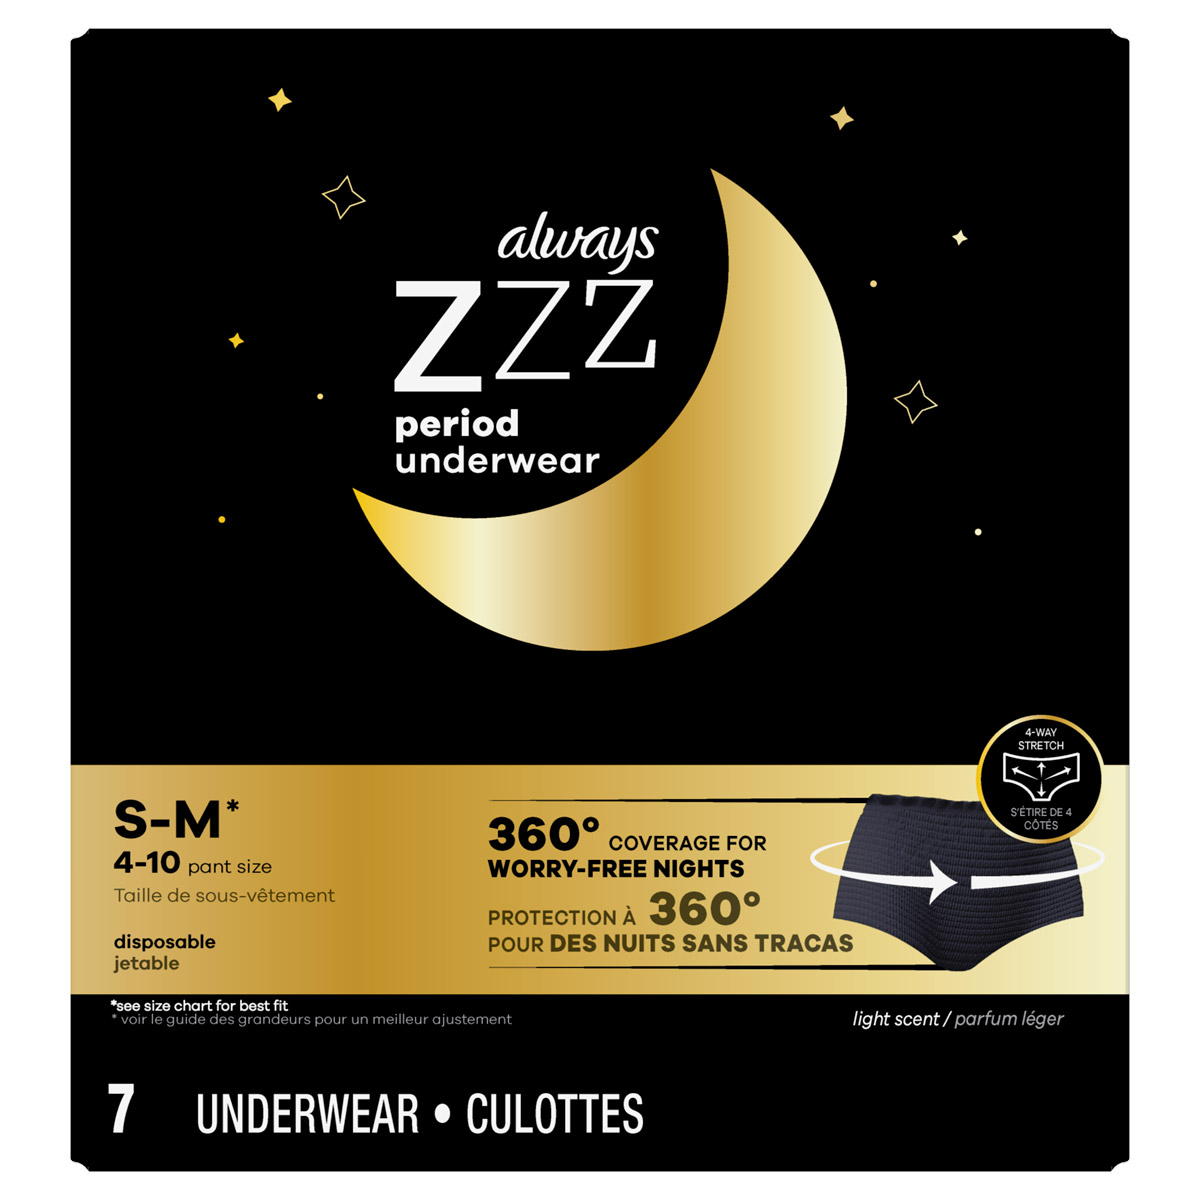  Always Zzzs Overnight Disposable Period Underwear For Women